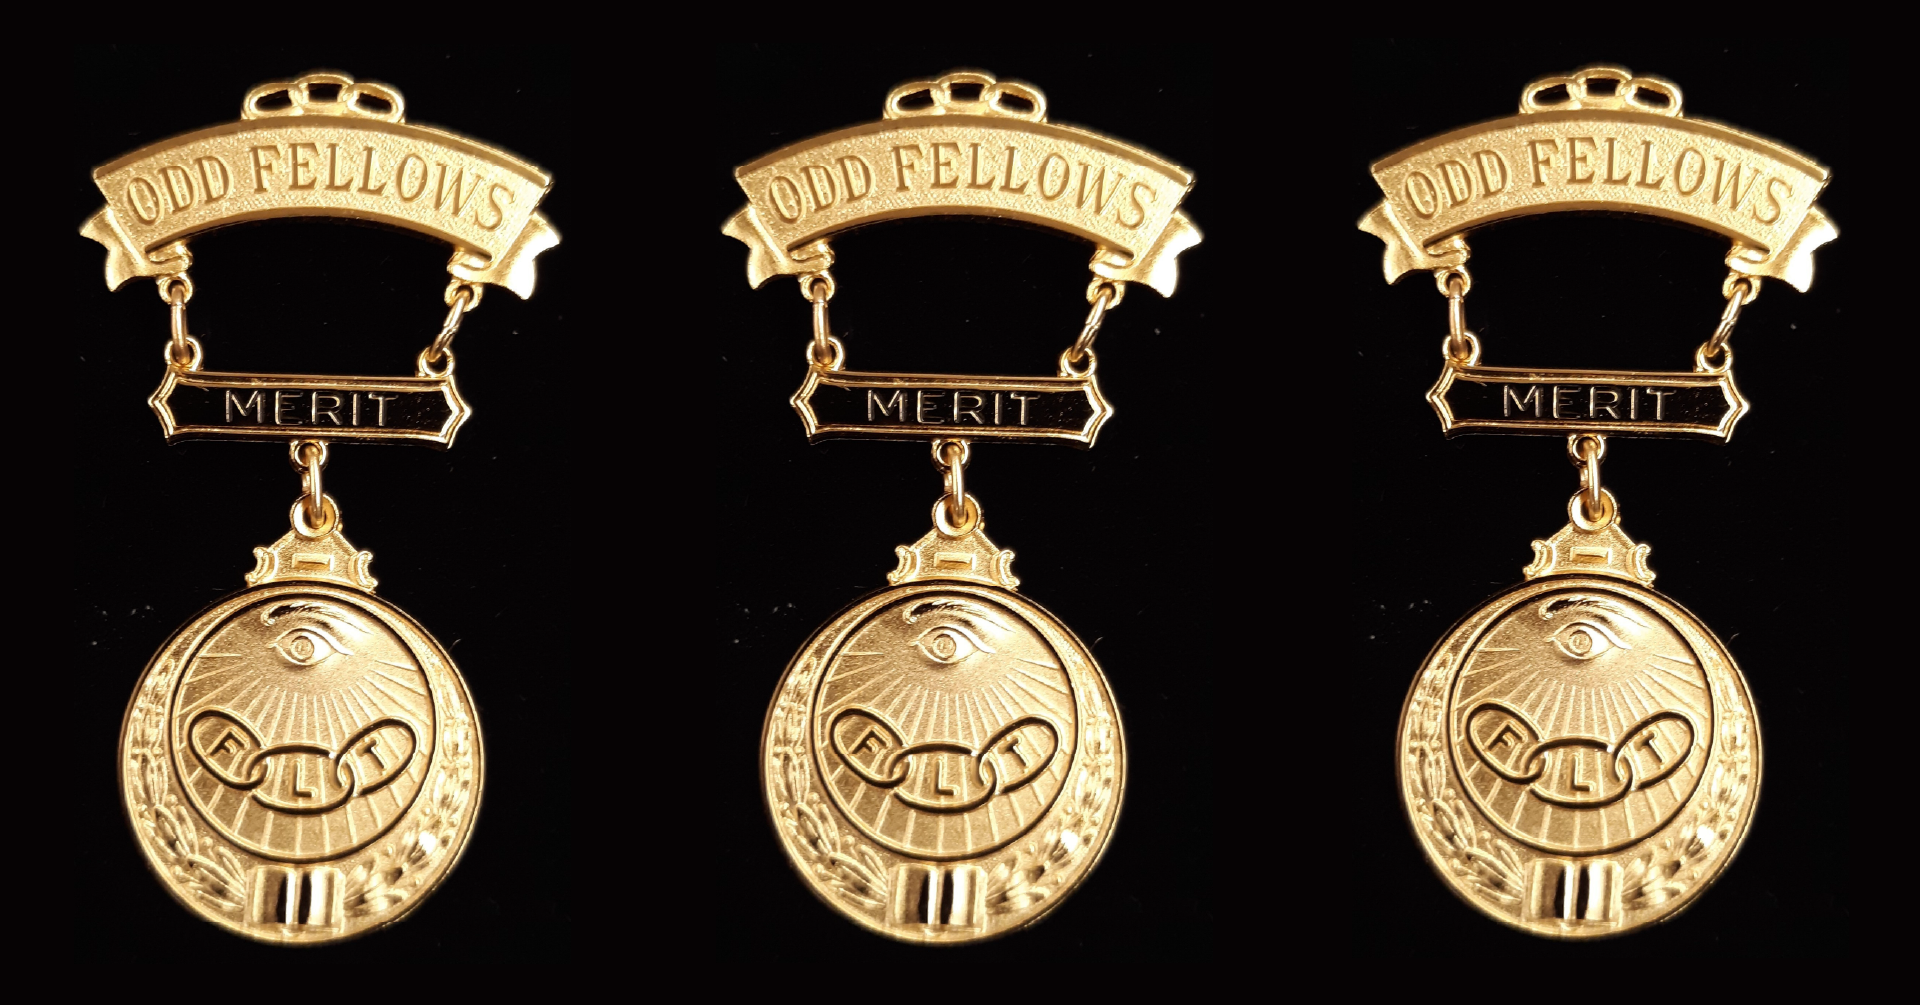 Three badges of merit on a black background